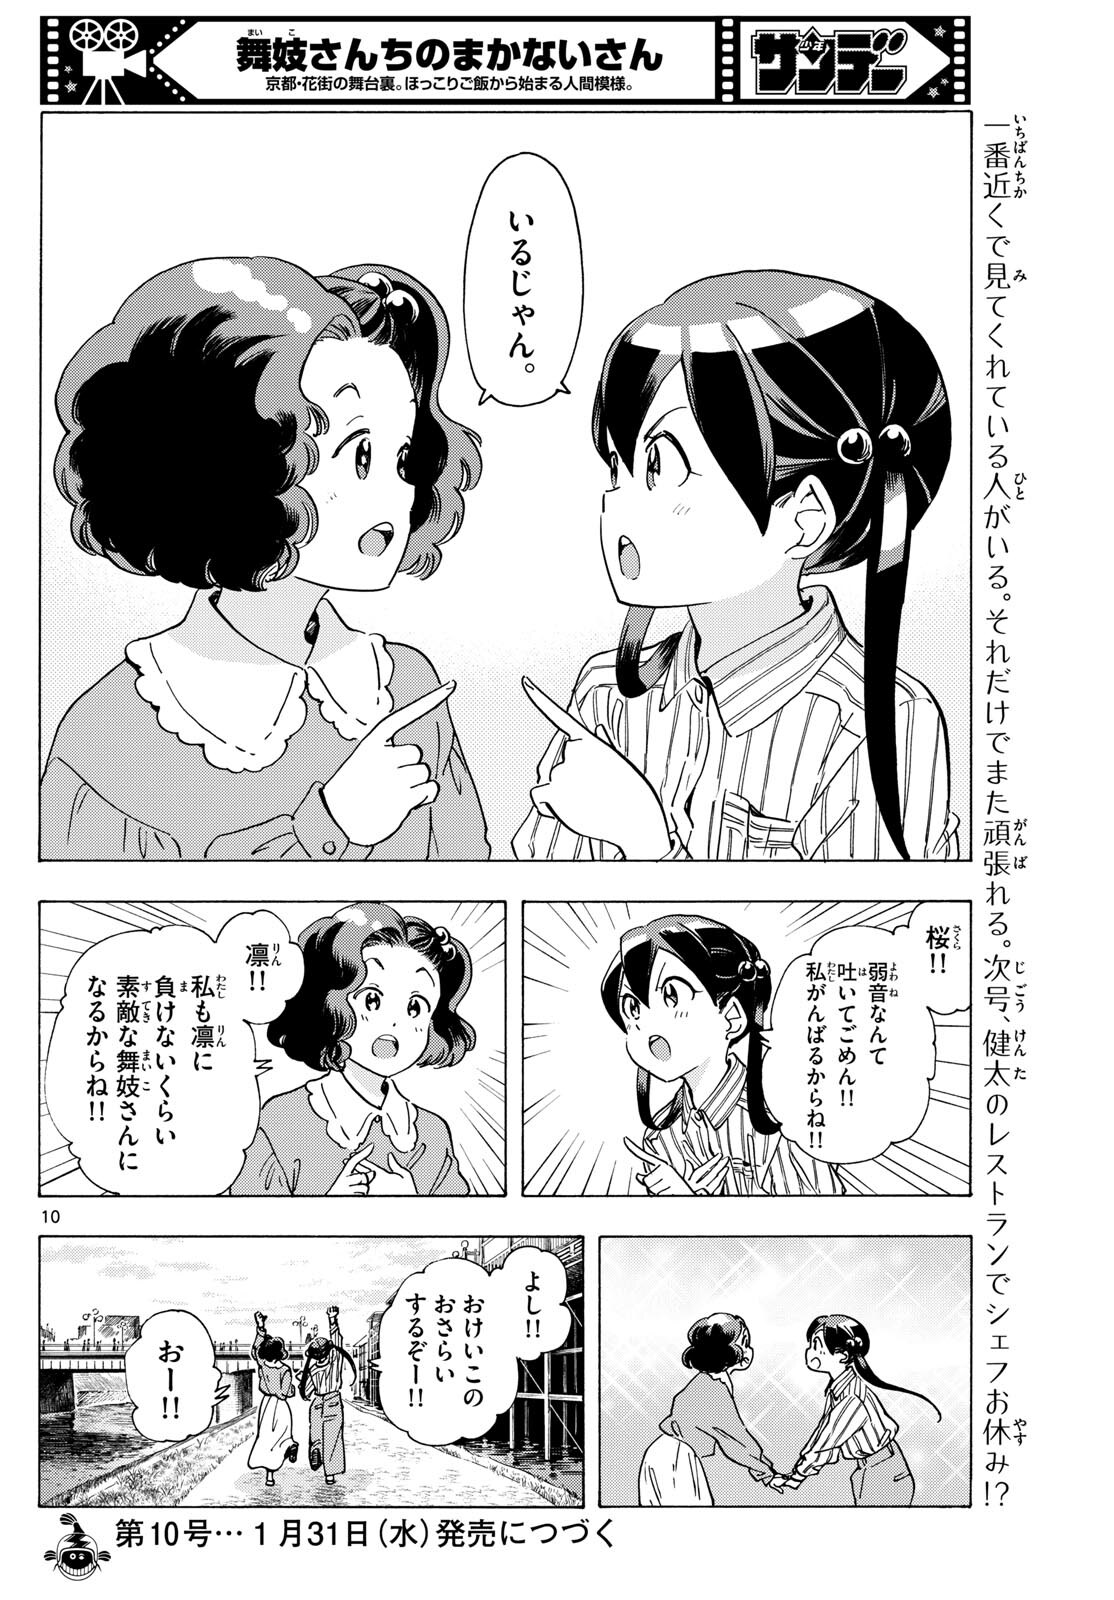 Maiko-san Chi no Makanai-san - Chapter 291 - Page 10